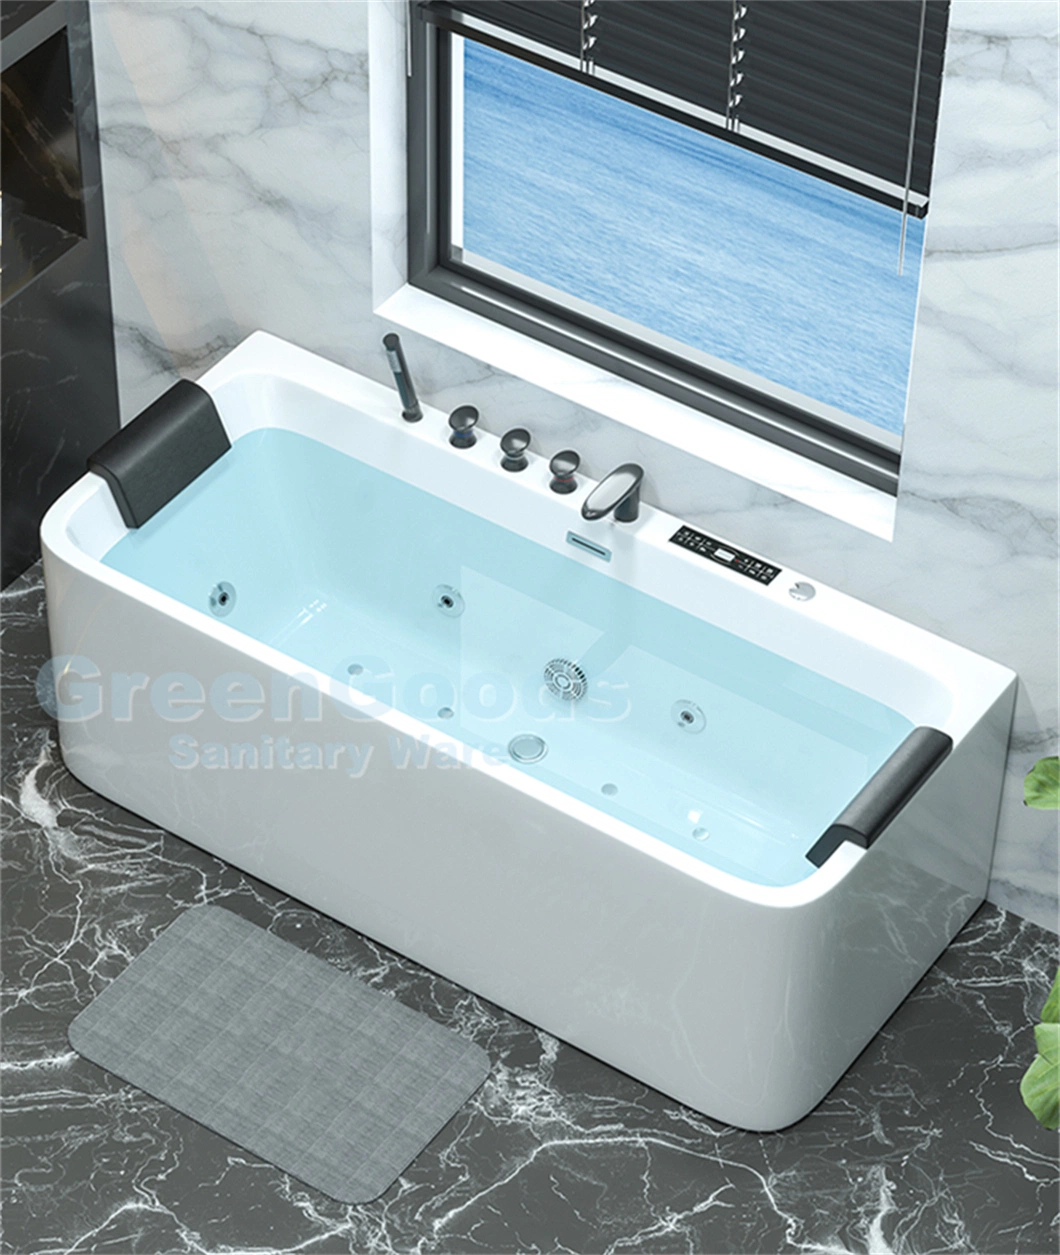 CE China 1300 Advanta Reverie Acrylic Fiberglass 2 Person Freestanding Air Whirlpool Bath Tub